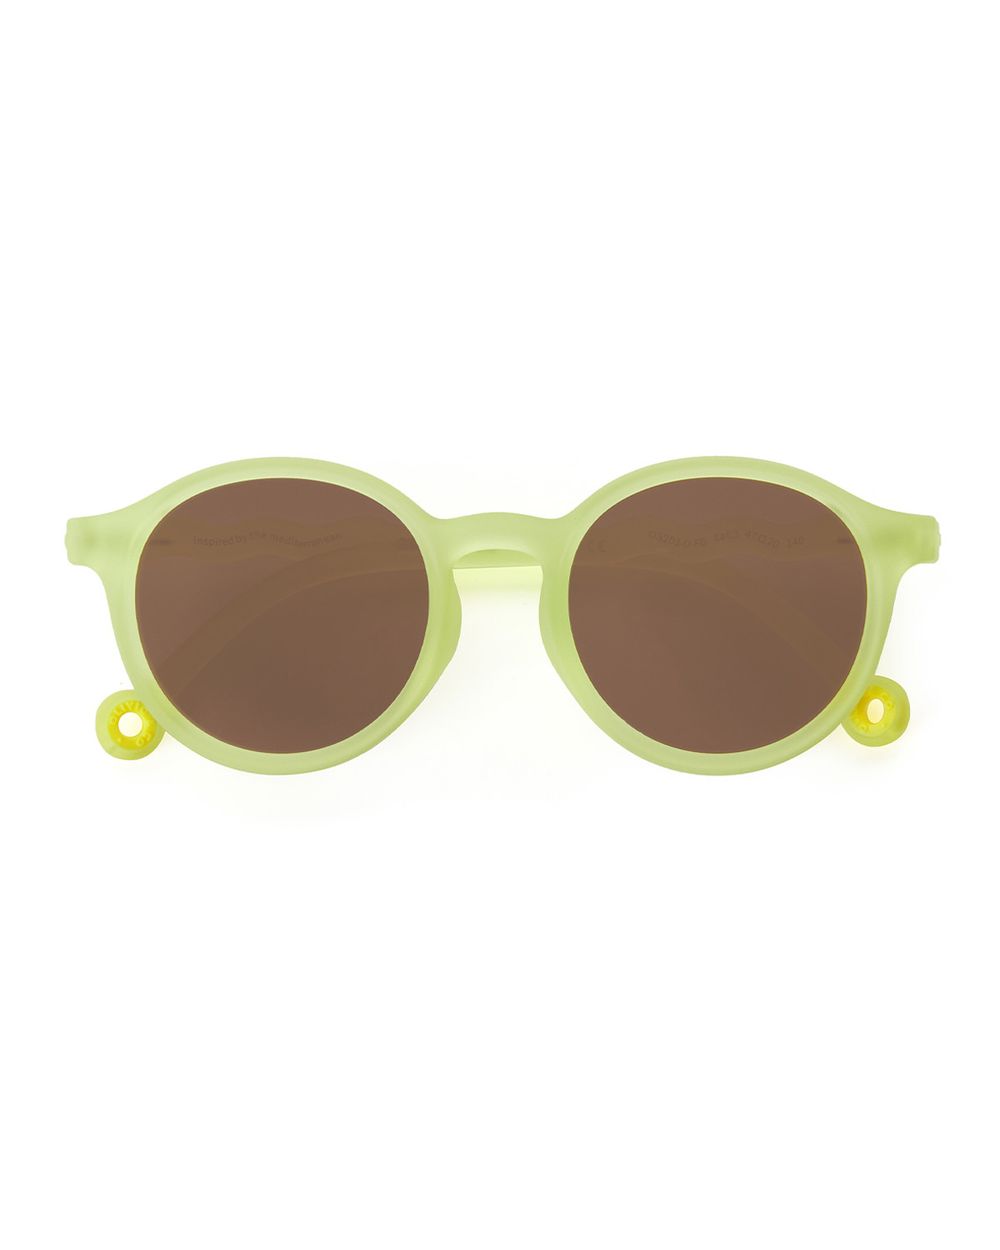 Kids Oval Sunglasses Lime Green